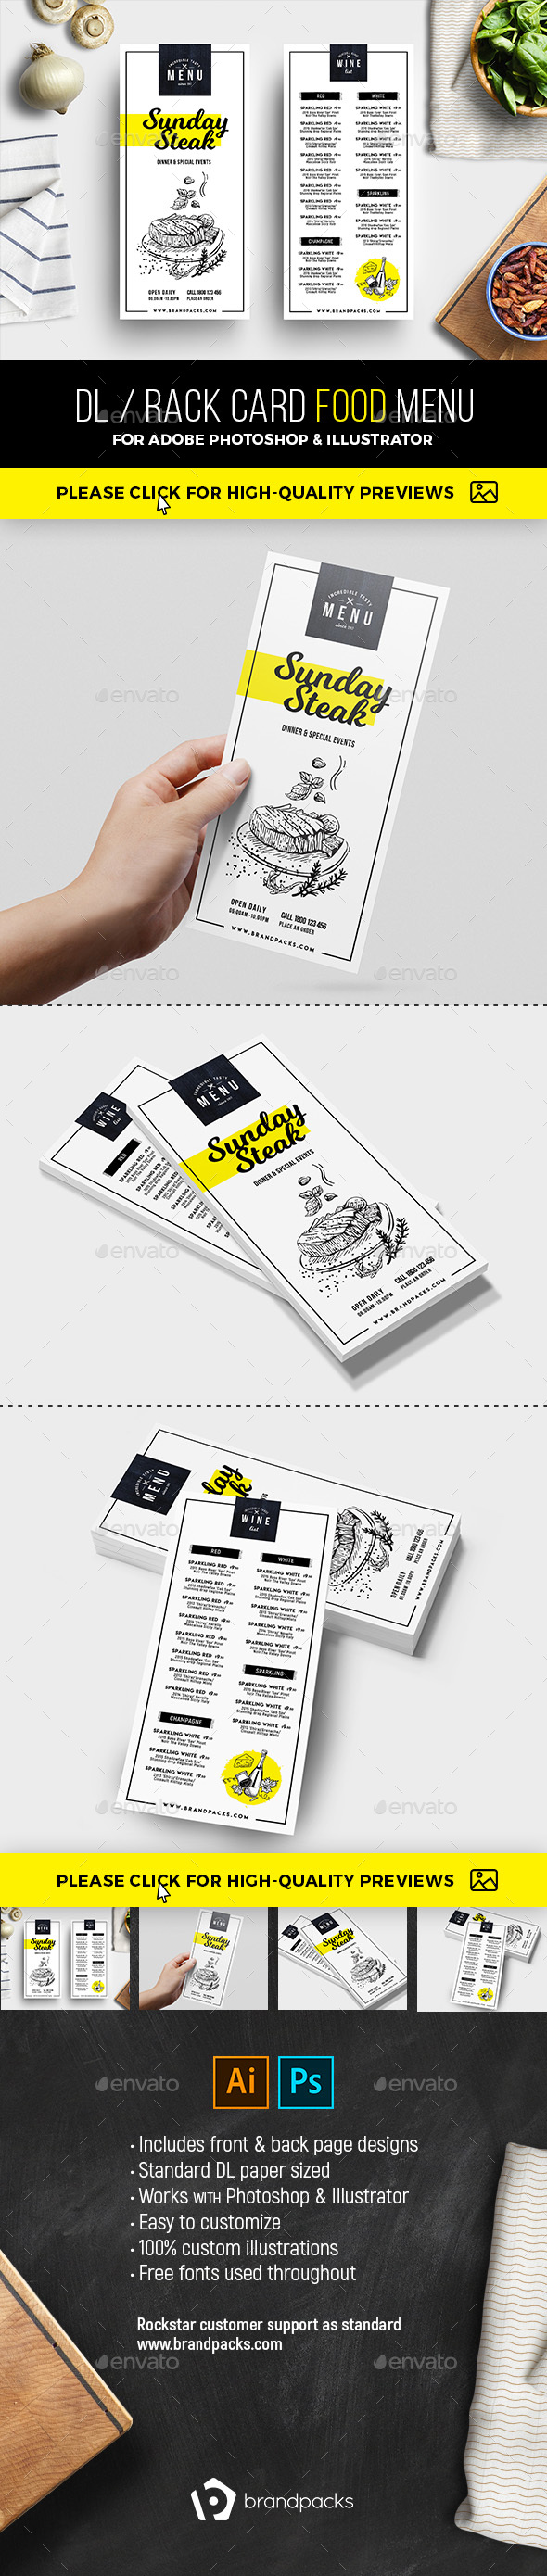 GraphicRiver DL Rack Card Food Menu 21080503